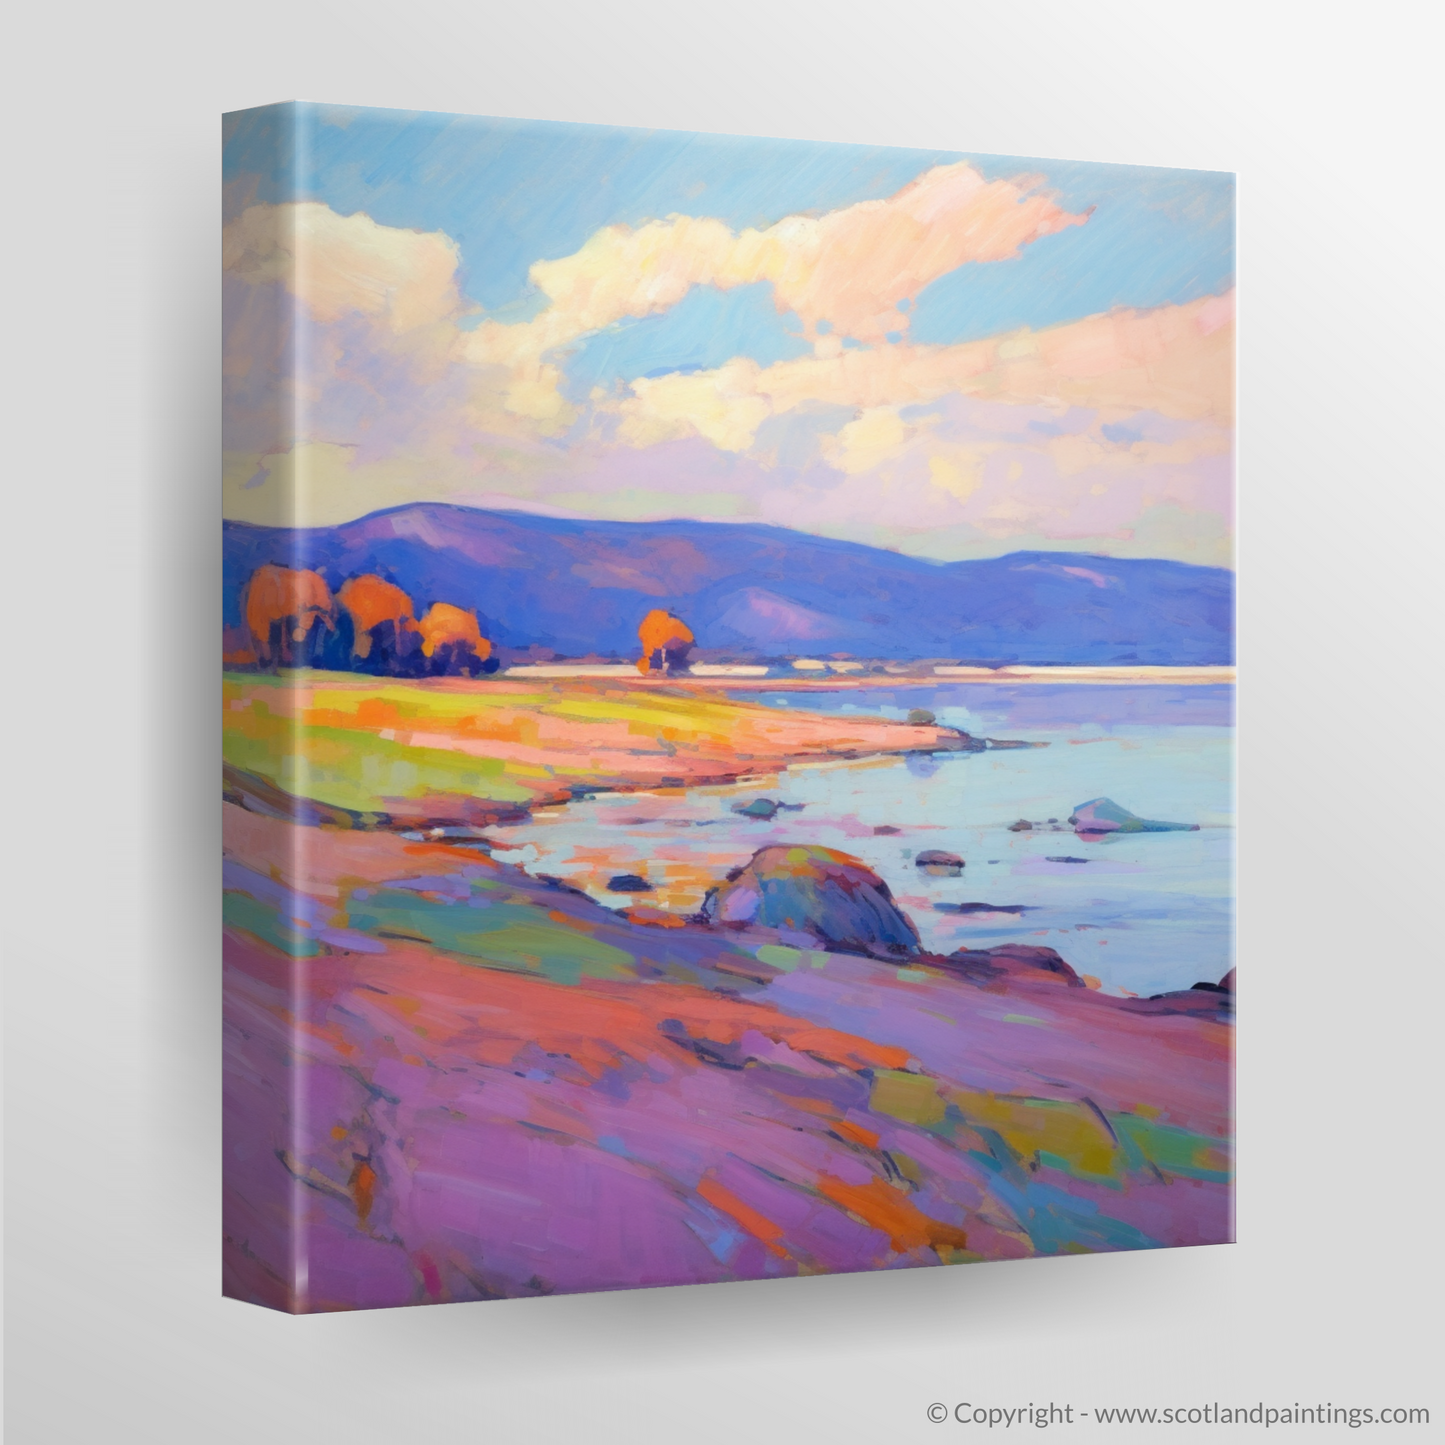 Longniddry Beach Serenity: An Impressionist Homage to Scottish Shores